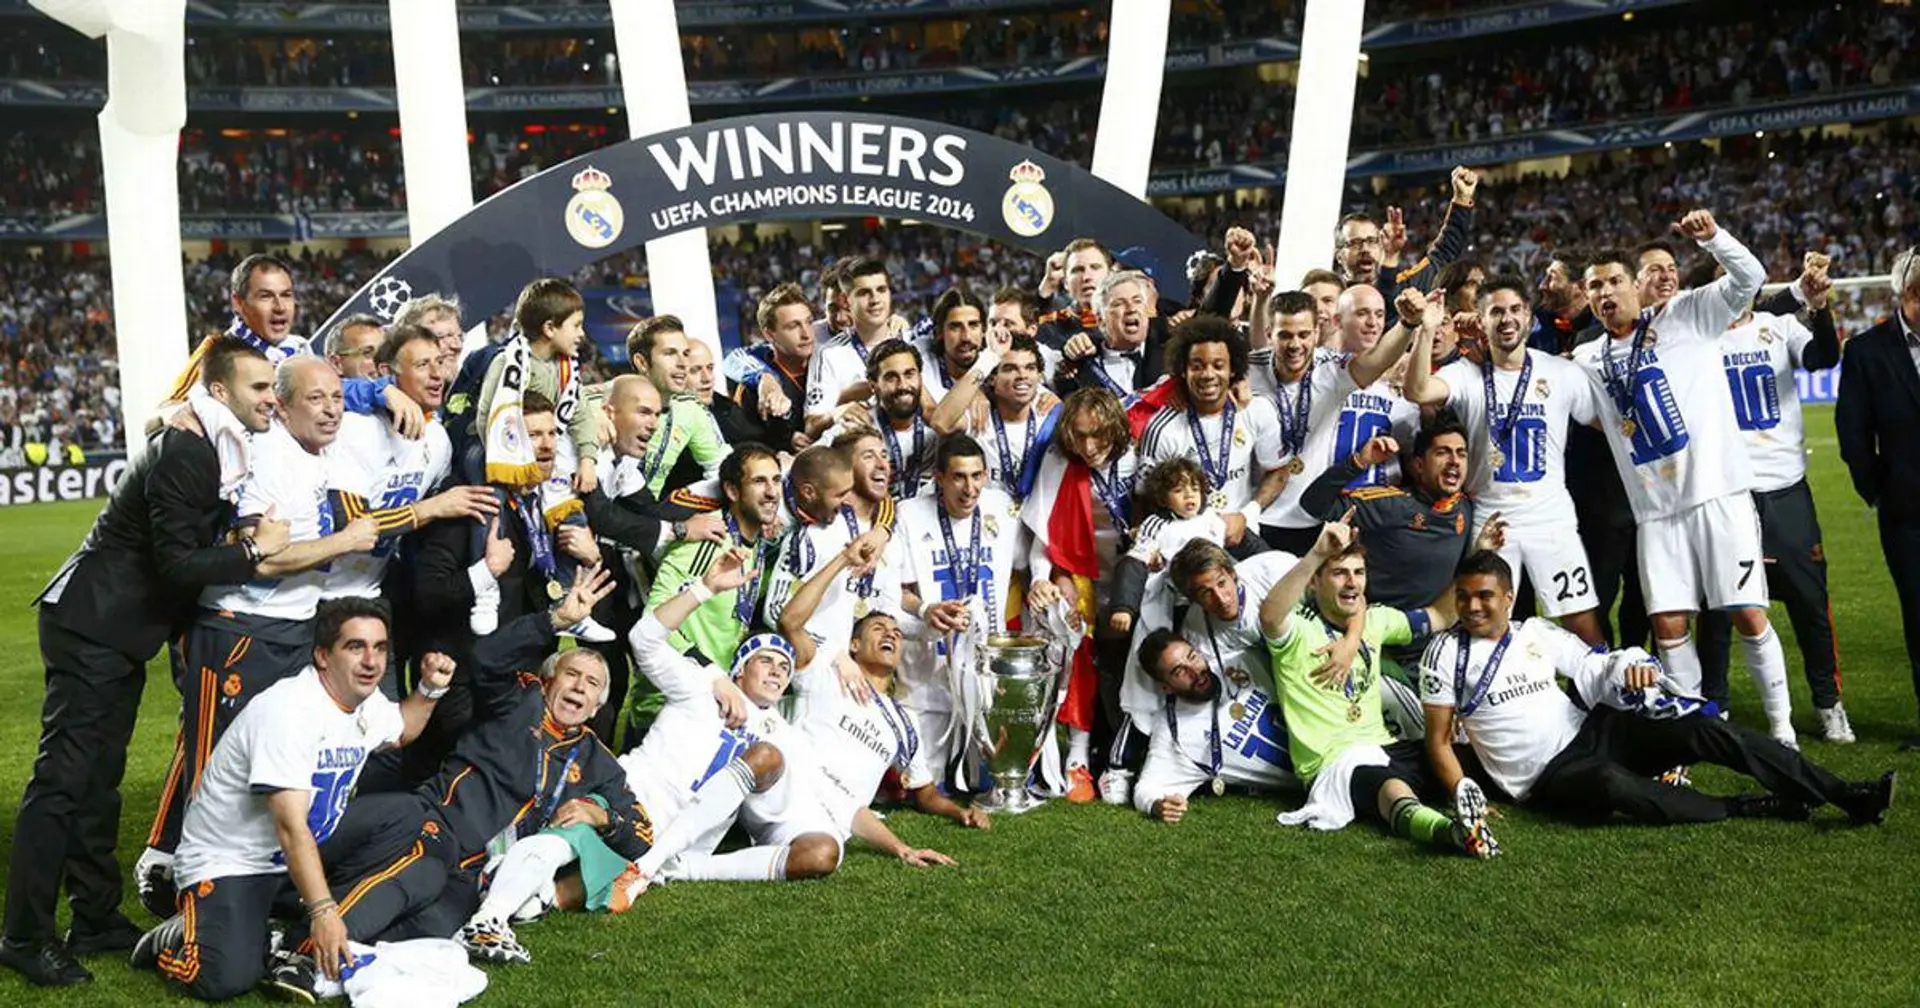 El dato de la esperanza para el Real Madrid de cara a la próxima Champions League